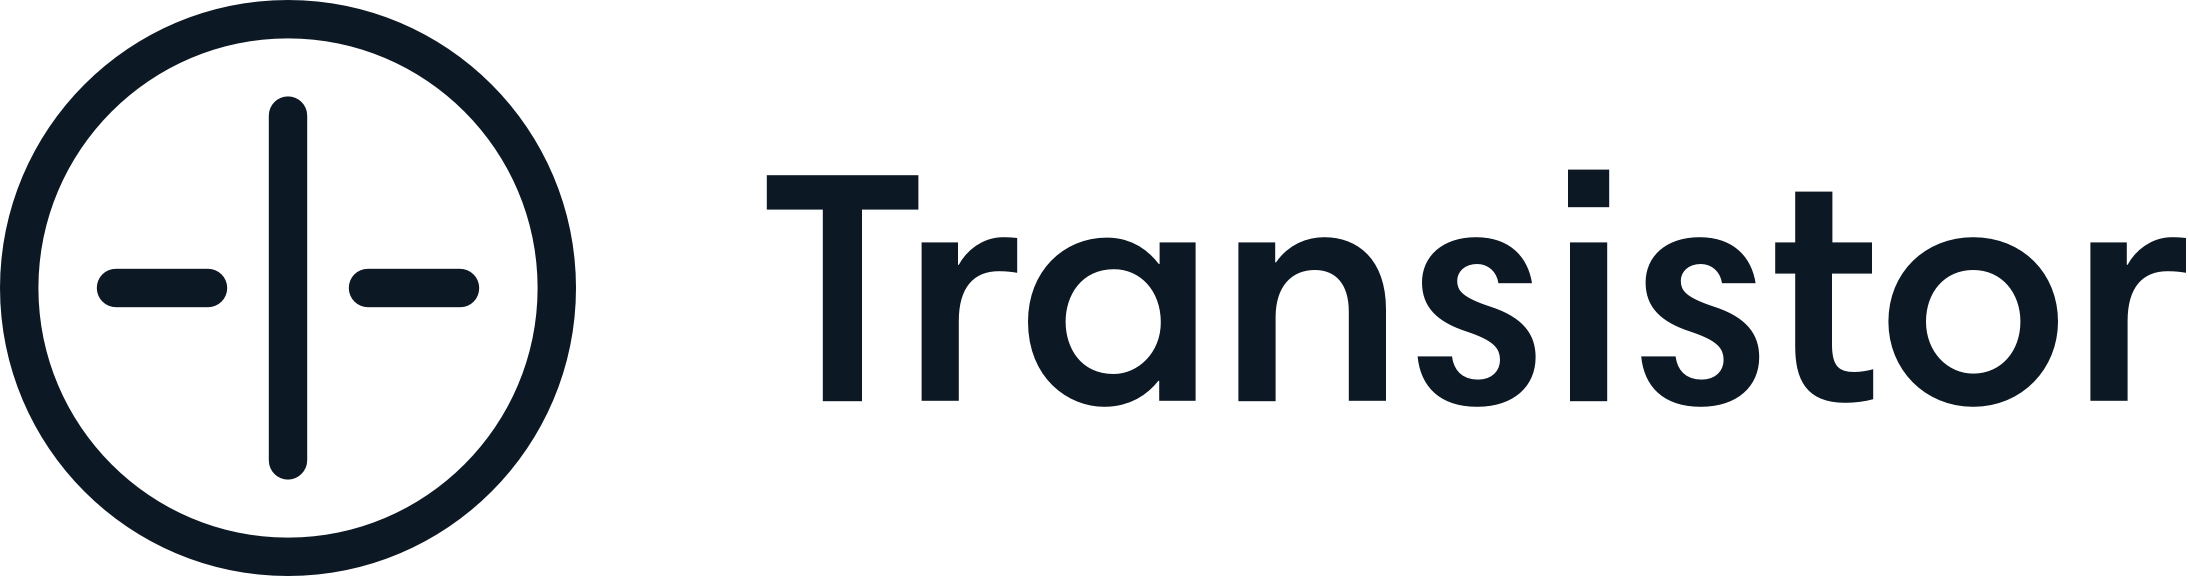 transistor-podcasting-logo-horizontal